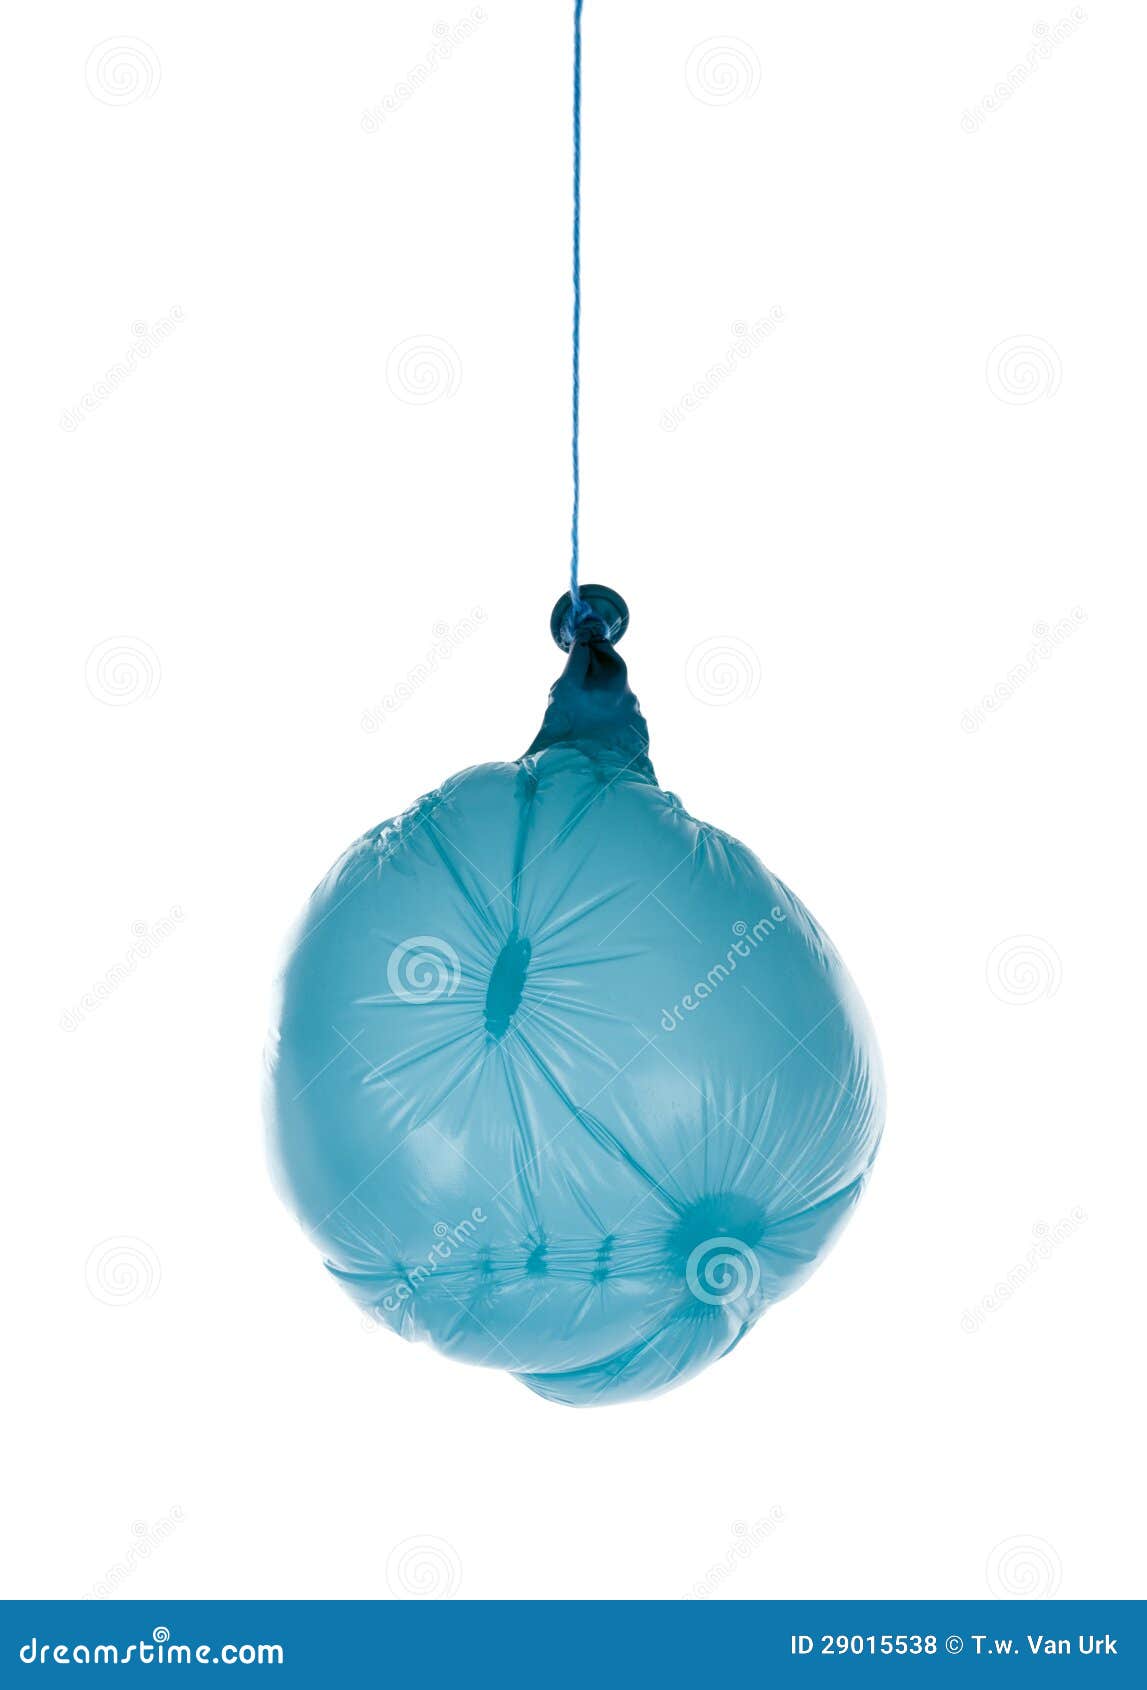 free clipart deflated balloon - photo #26